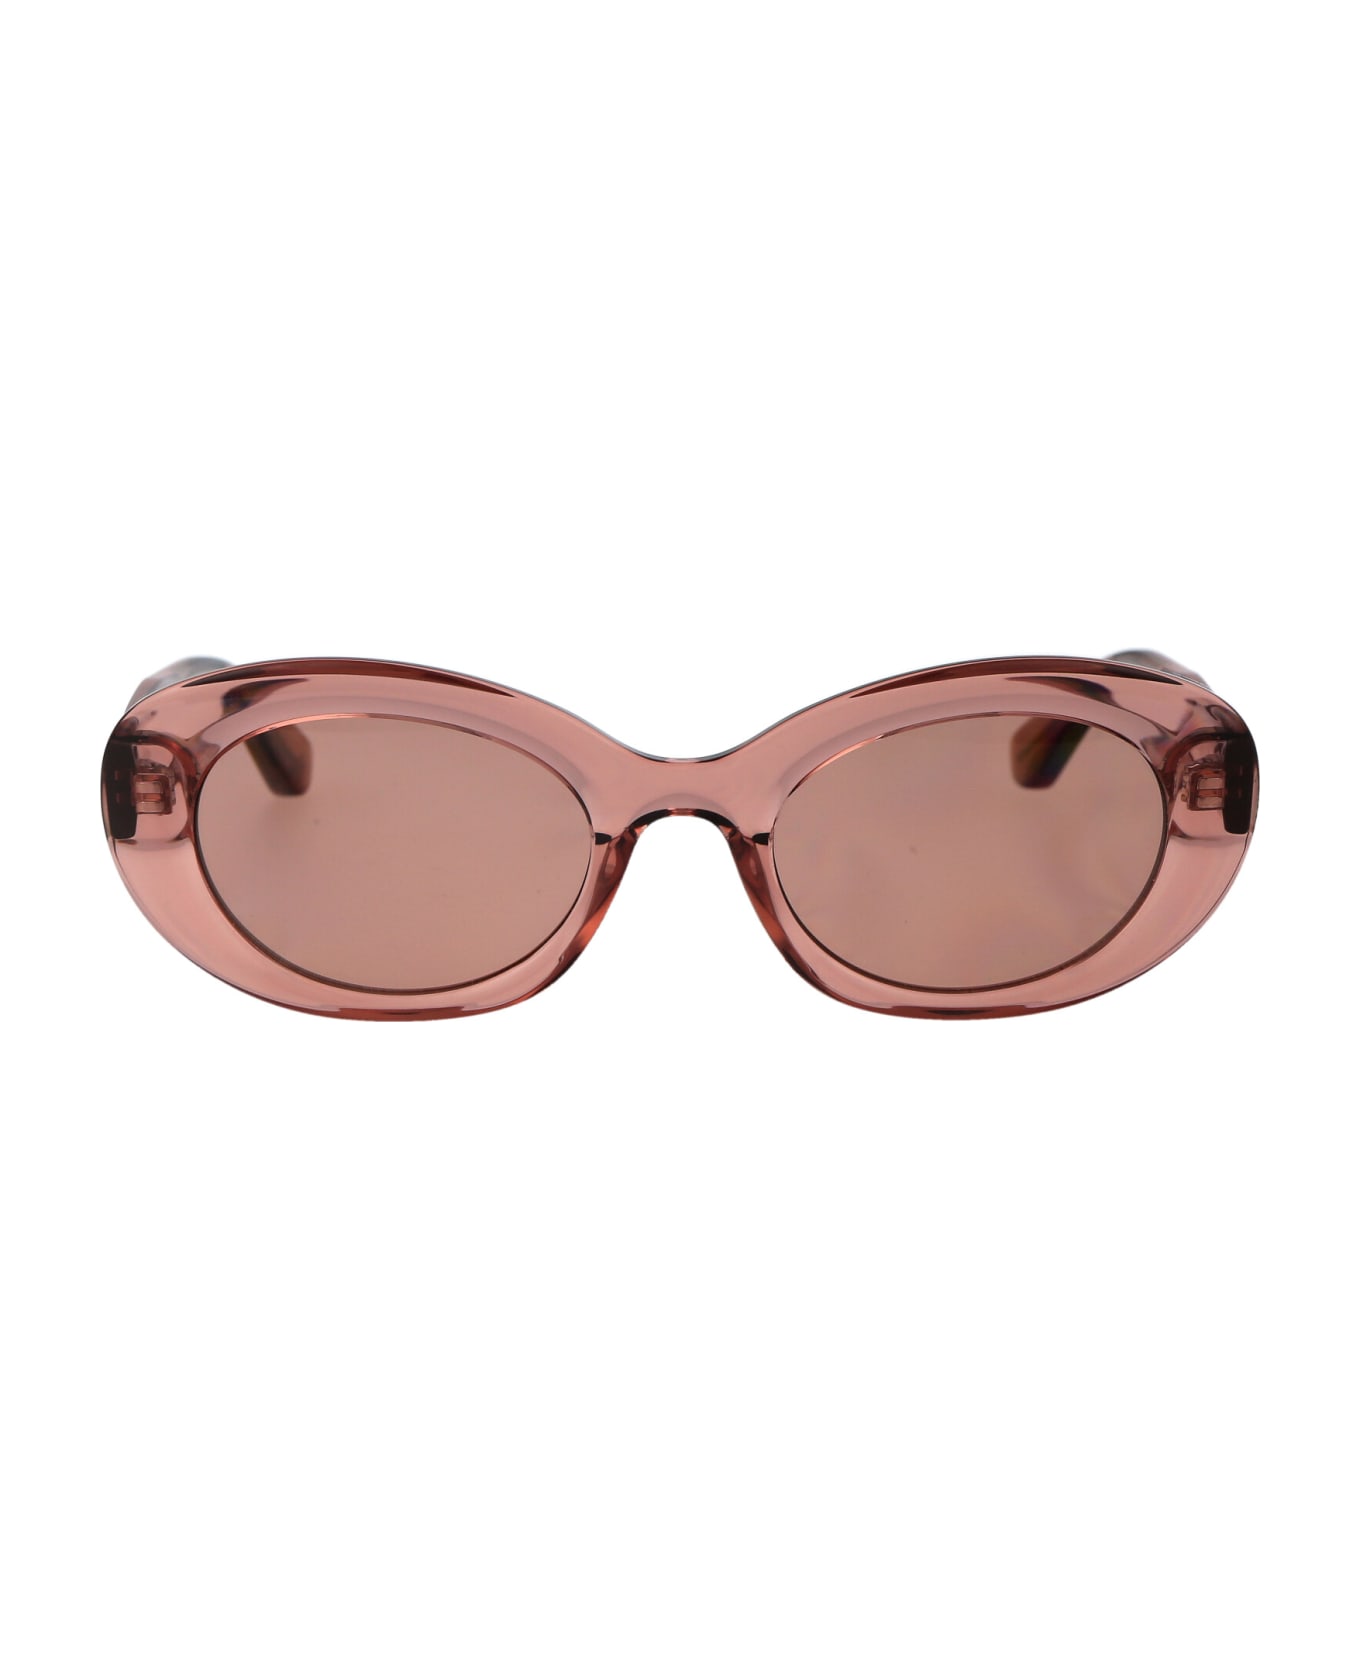 Longchamp Lo756s Sunglasses - 610 TRANSPARENT ROSE サングラス